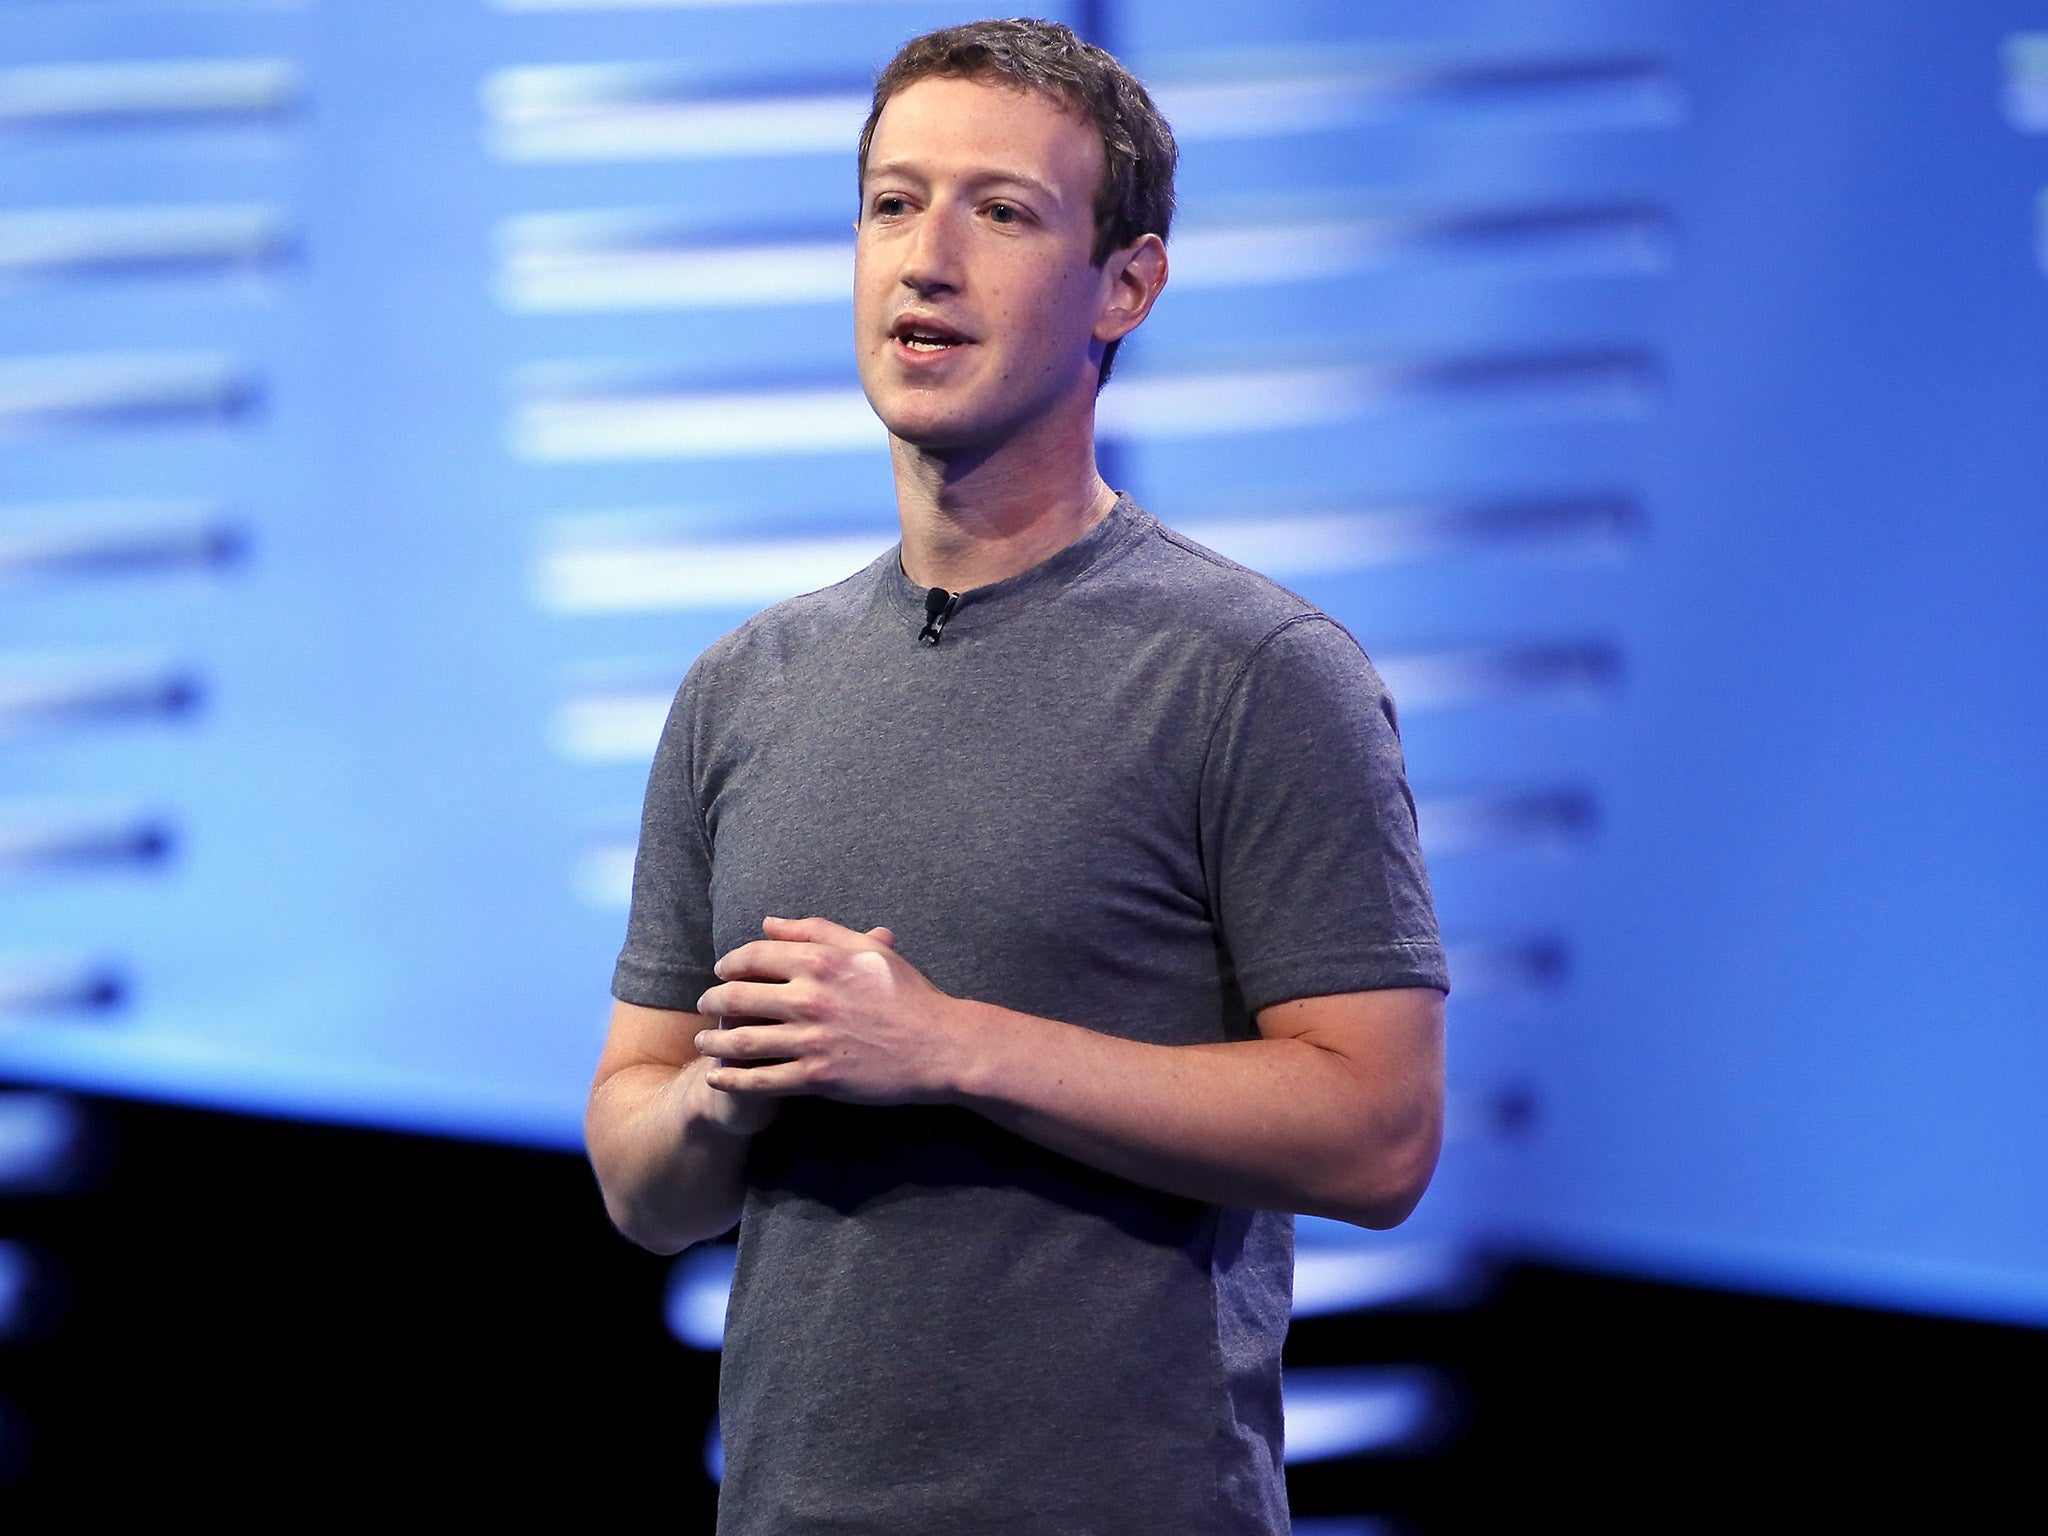 Mark Zuckerberg addresses the F8 Facebook developer conference in San Francisco yesterday